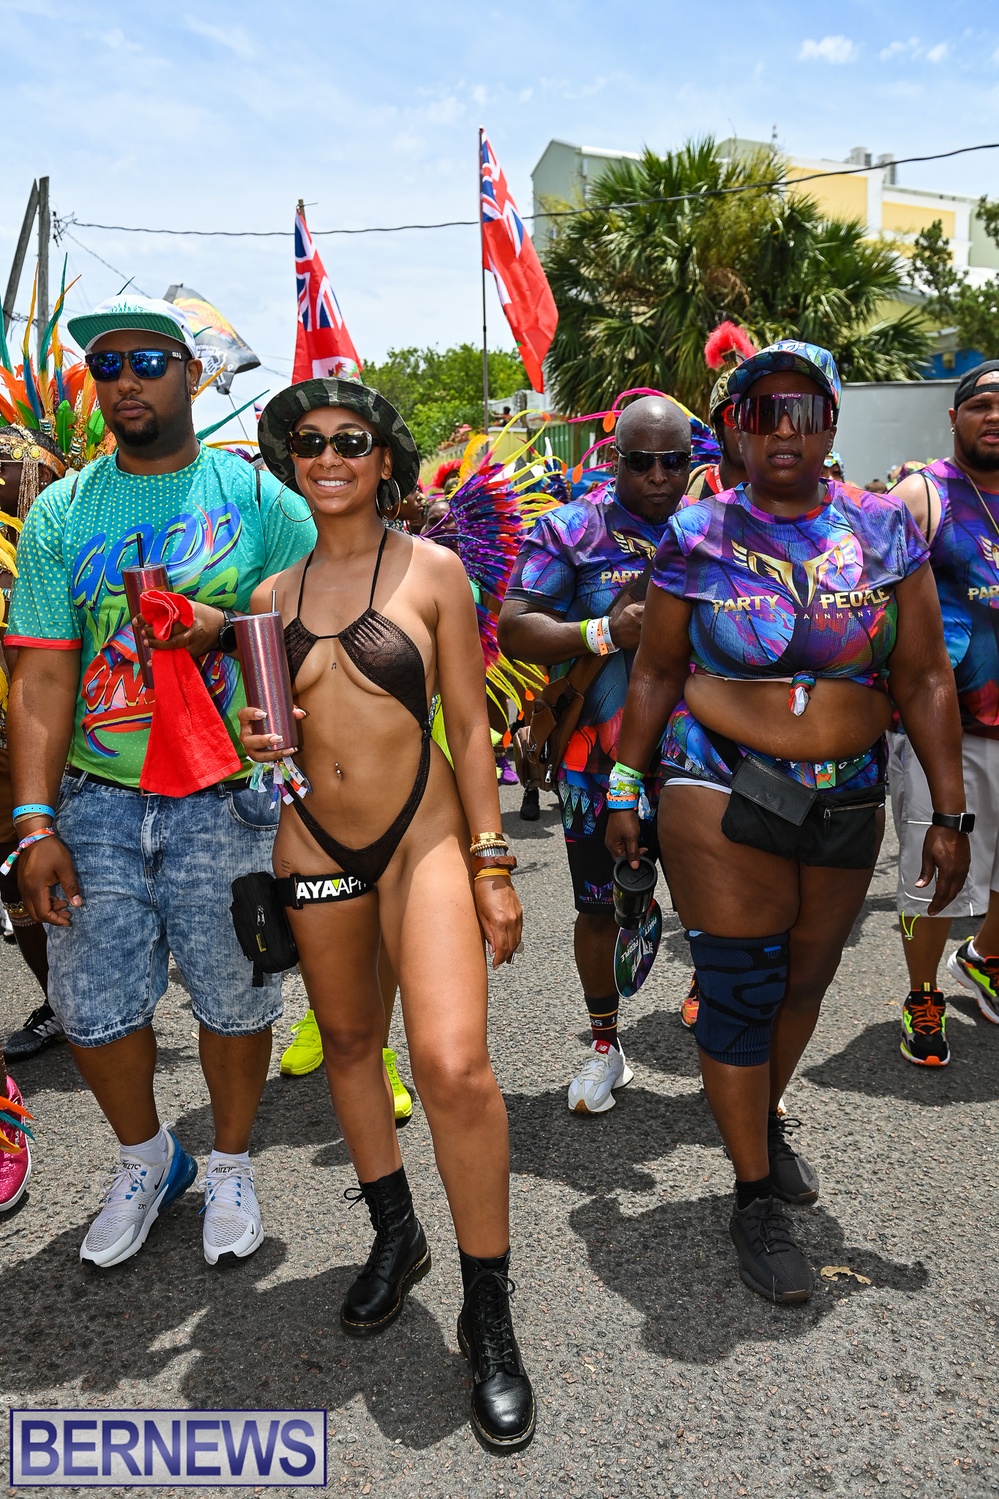 Carnival in Bermuda ‘Revel de Road’ event  party June 2022 AW (38)